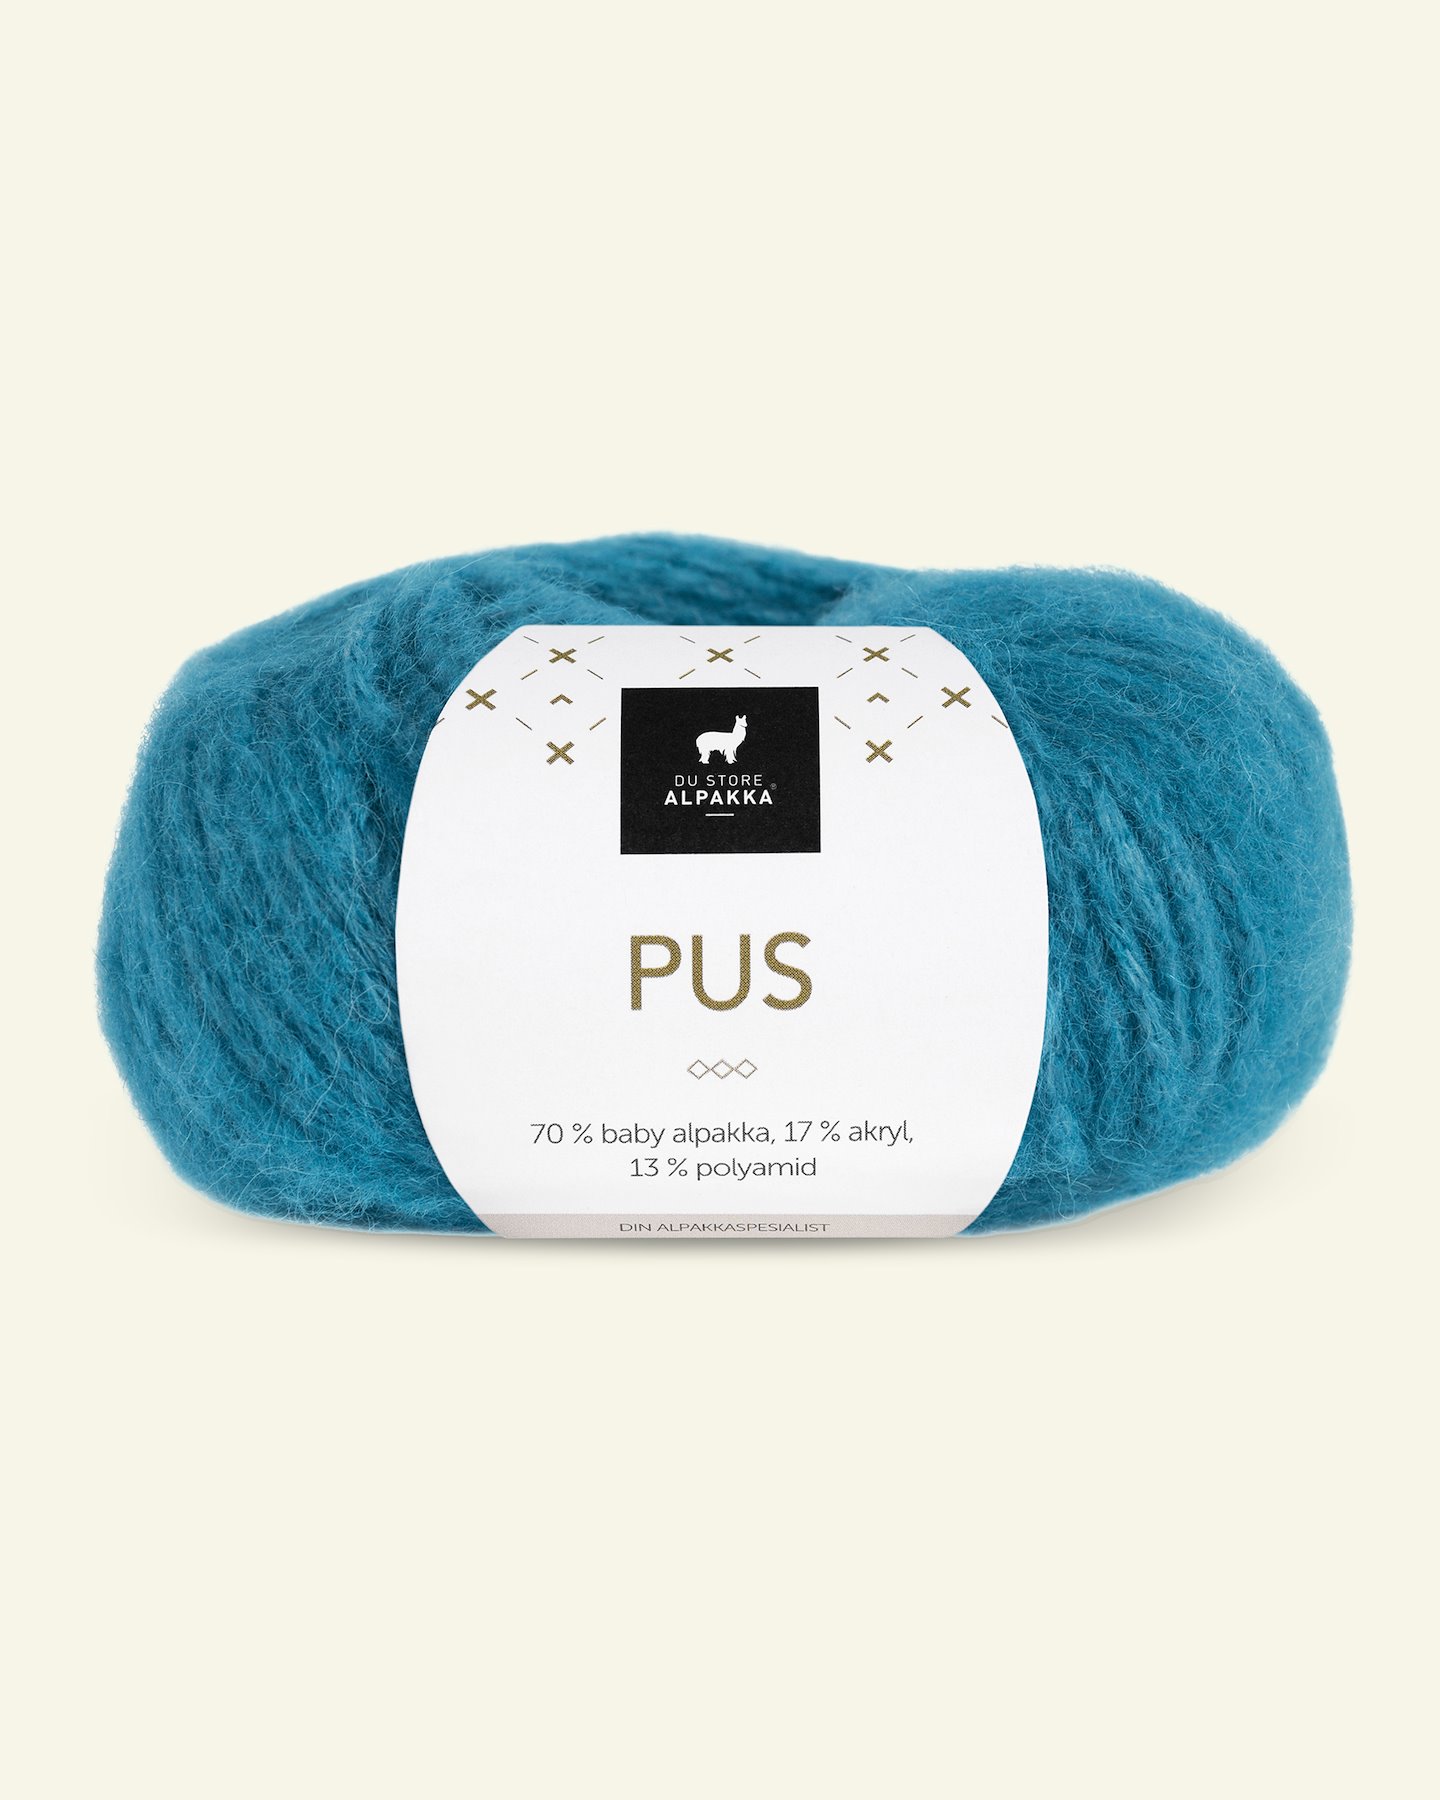 Du Store Alpakka, alpaca mixed yarn "Pus", dark turquise (4002) 90000712_pack